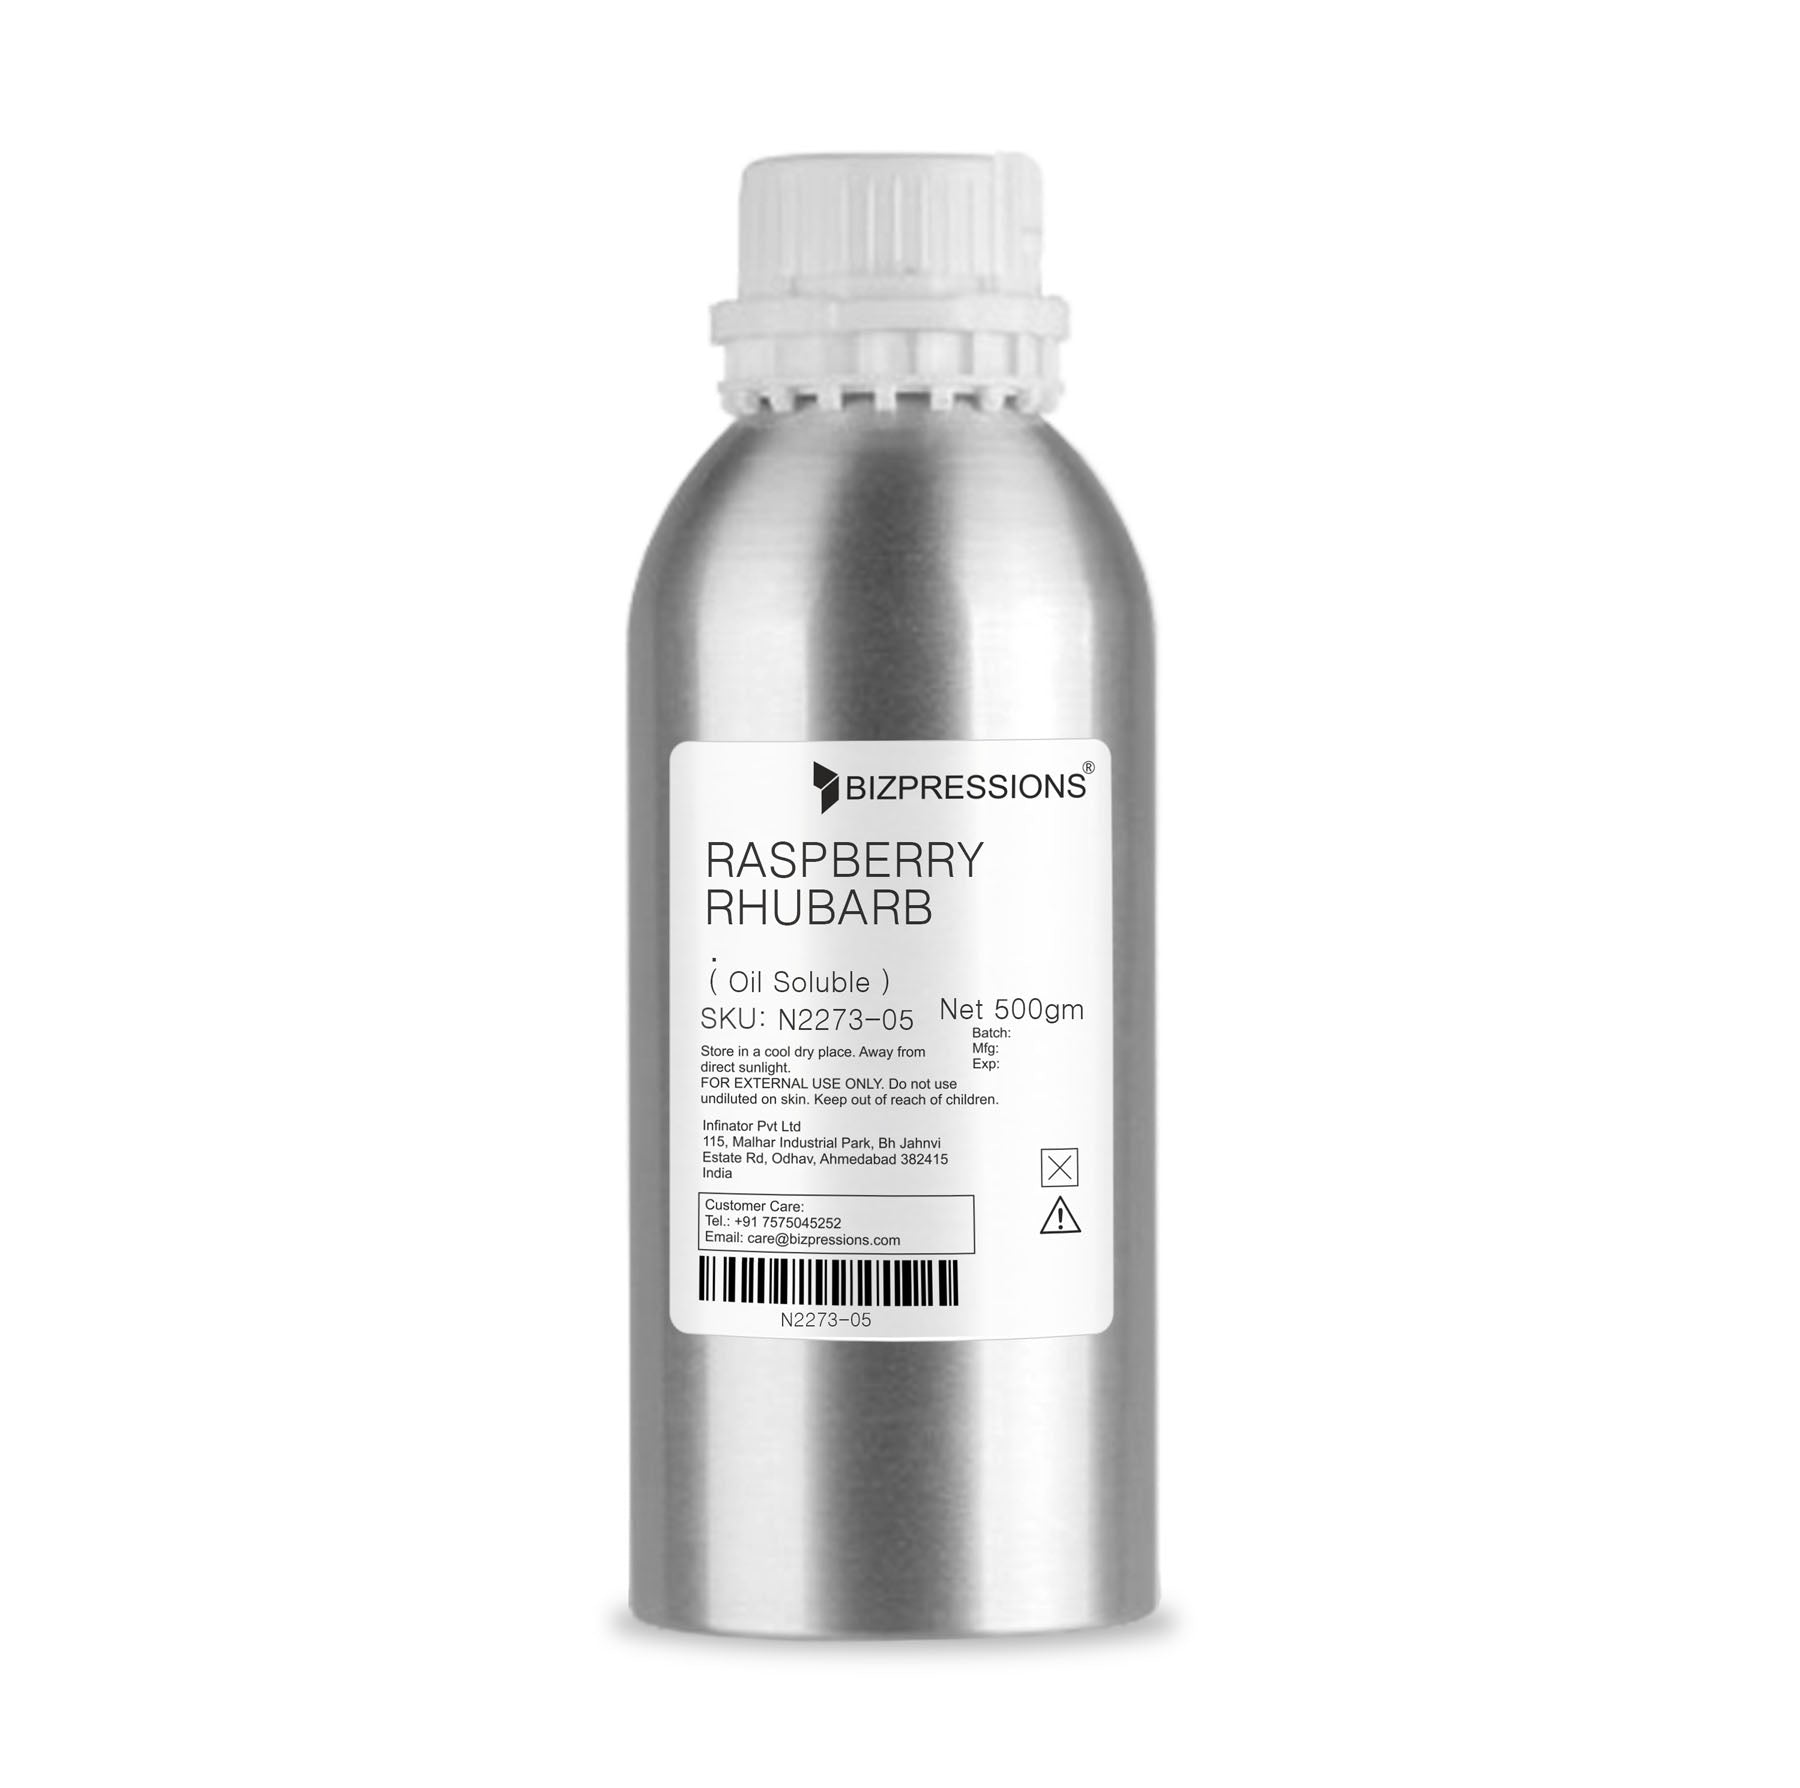 RASPBERRY RHUBARB - Fragrance ( Oil Soluble ) - 500 gm